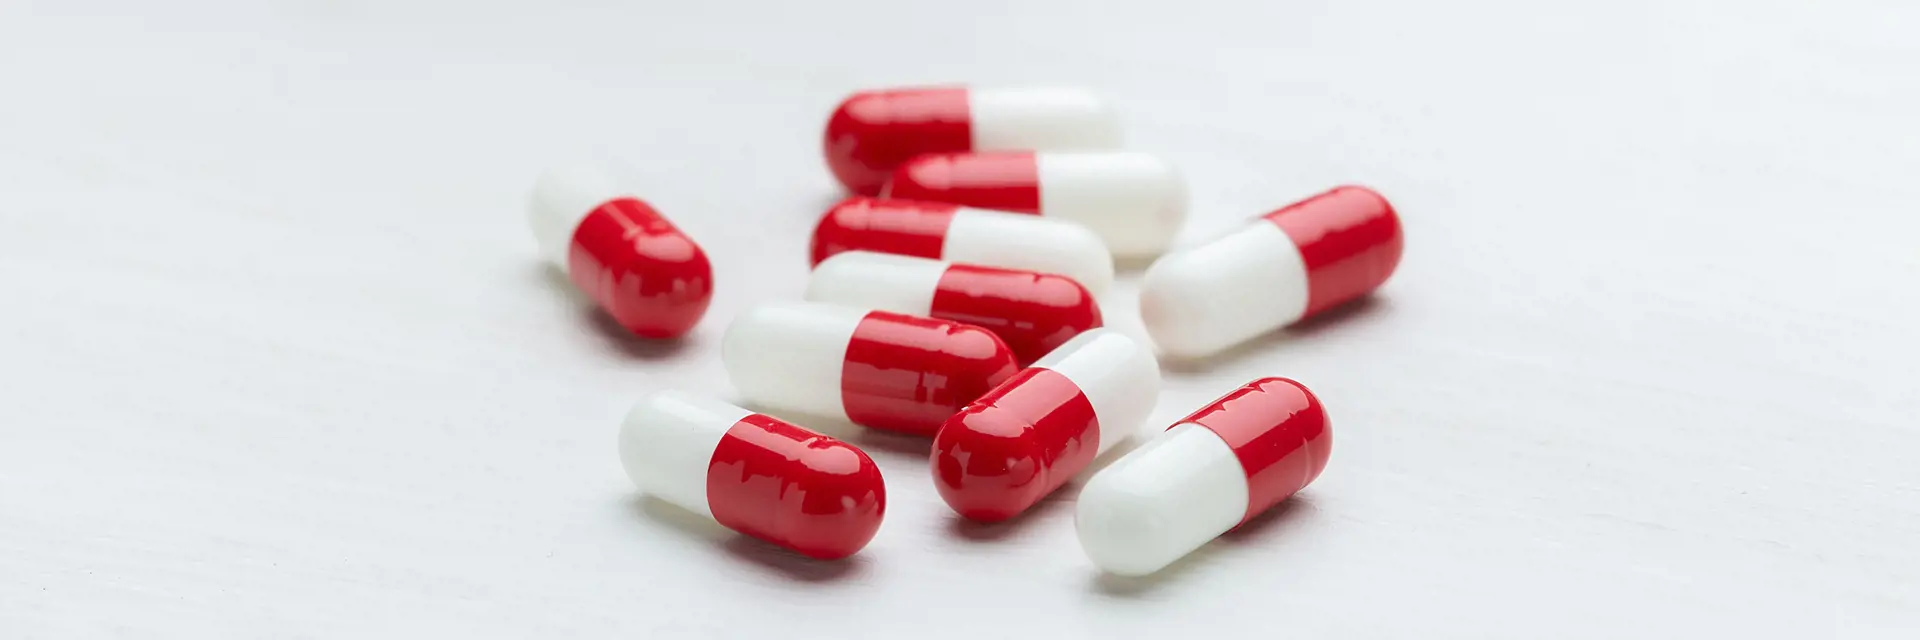 Red and white medicine capsules